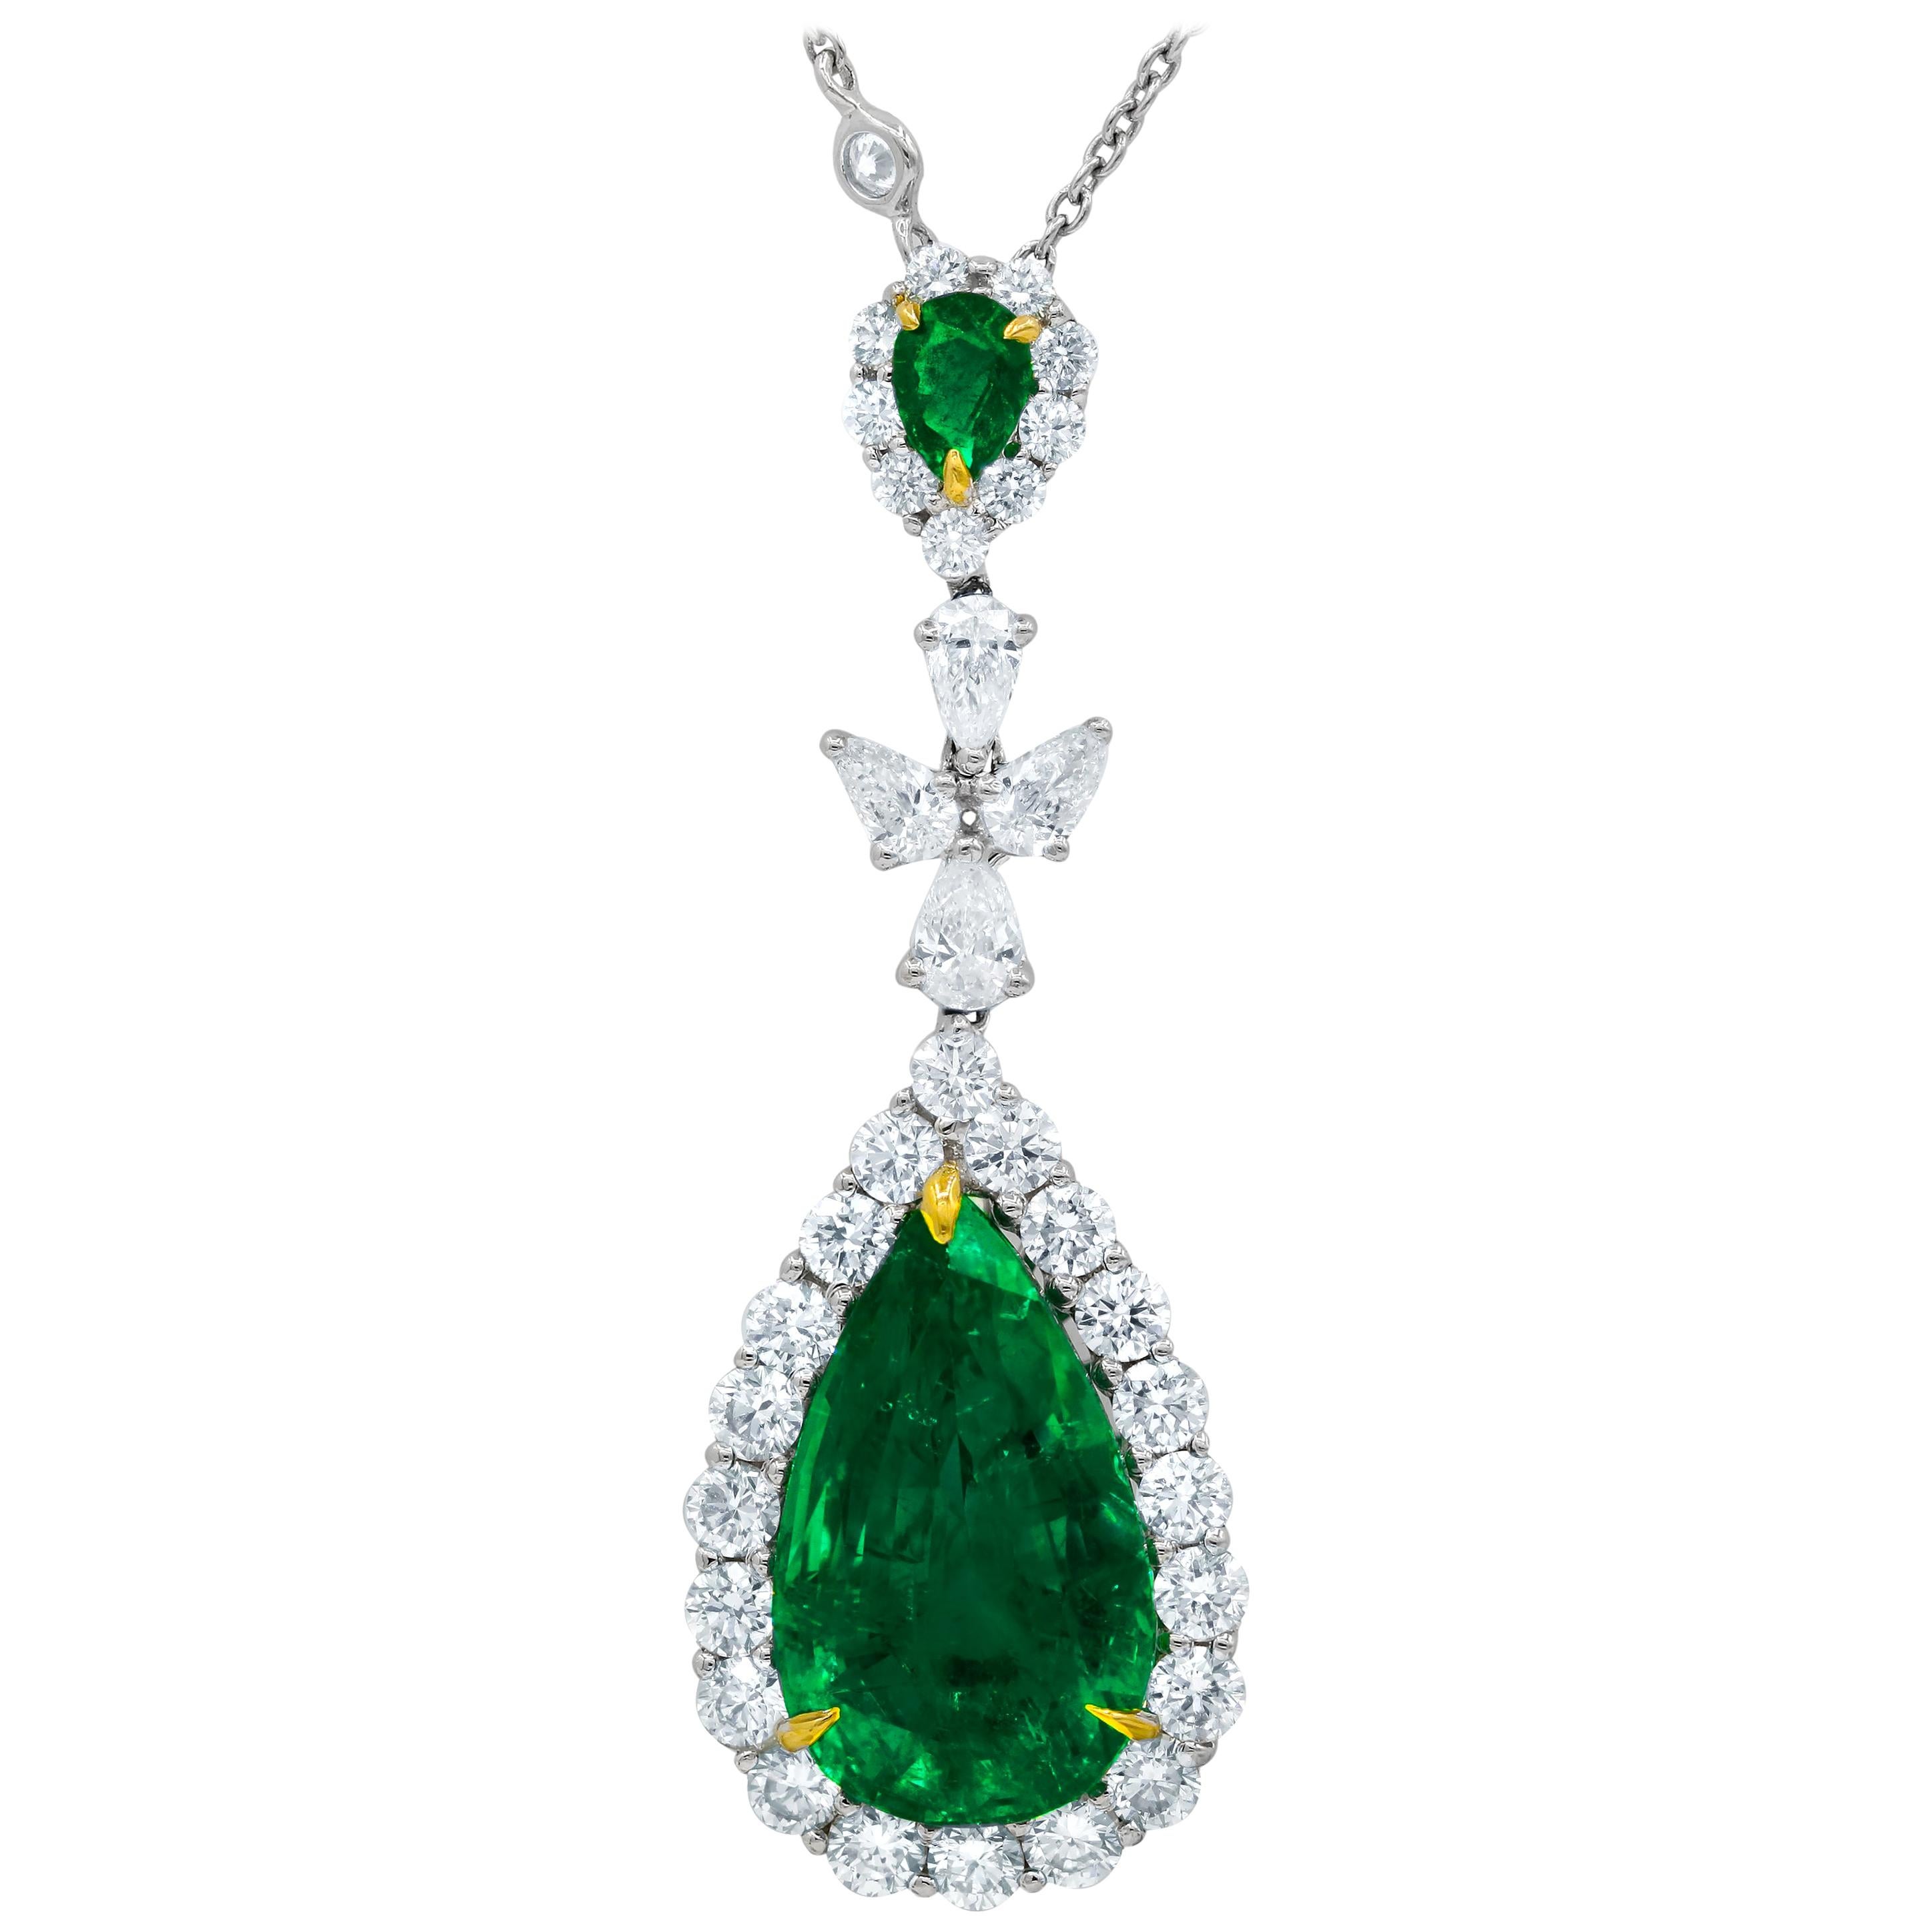 Diana M. Certified 8.58 Carat Green Emerald Pendant